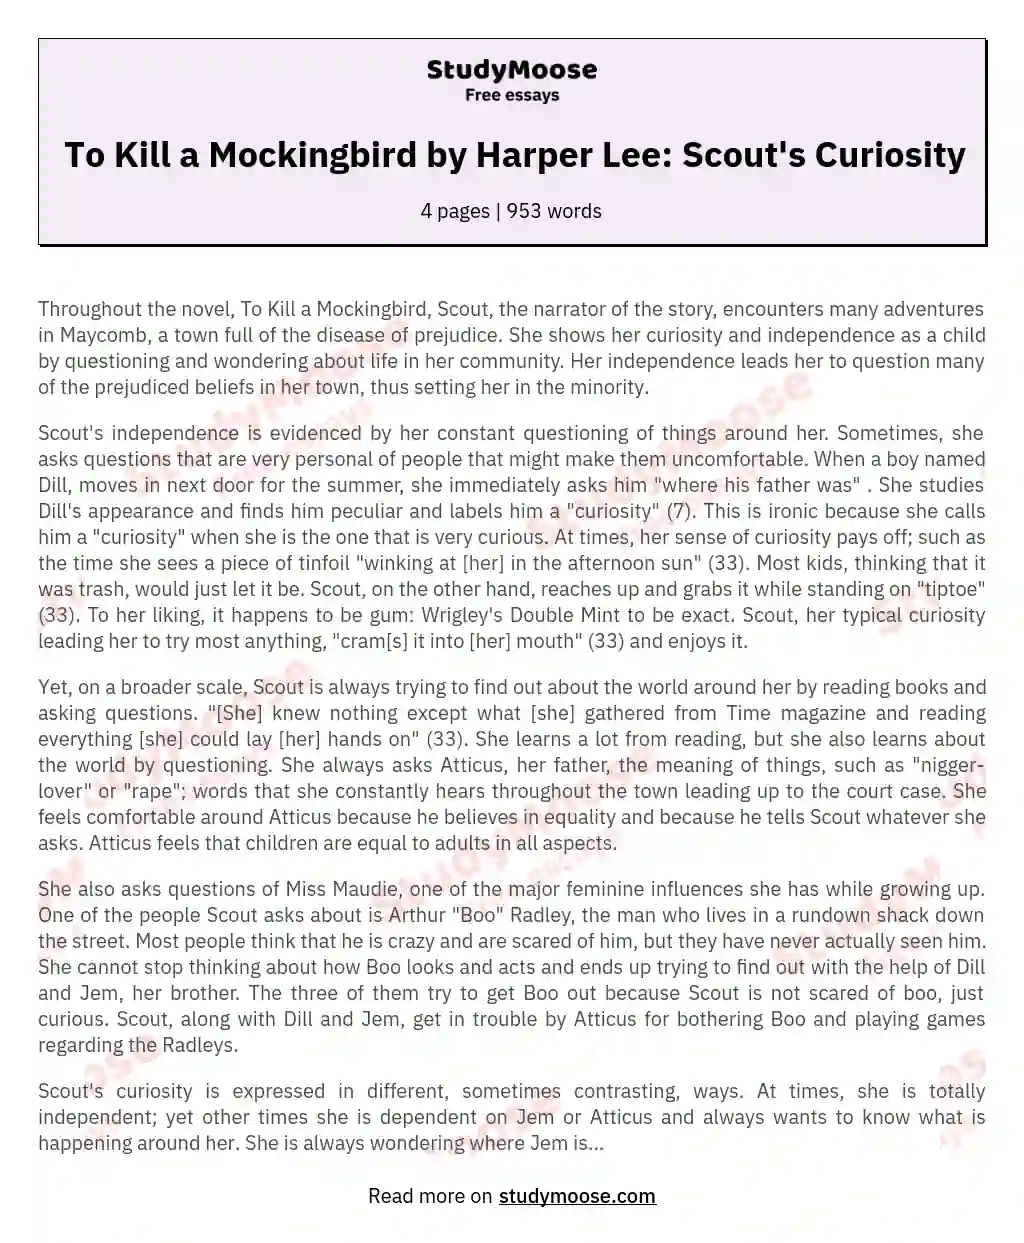 To Kill a Mockingbird by Harper Lee: Scout's Curiosity essay